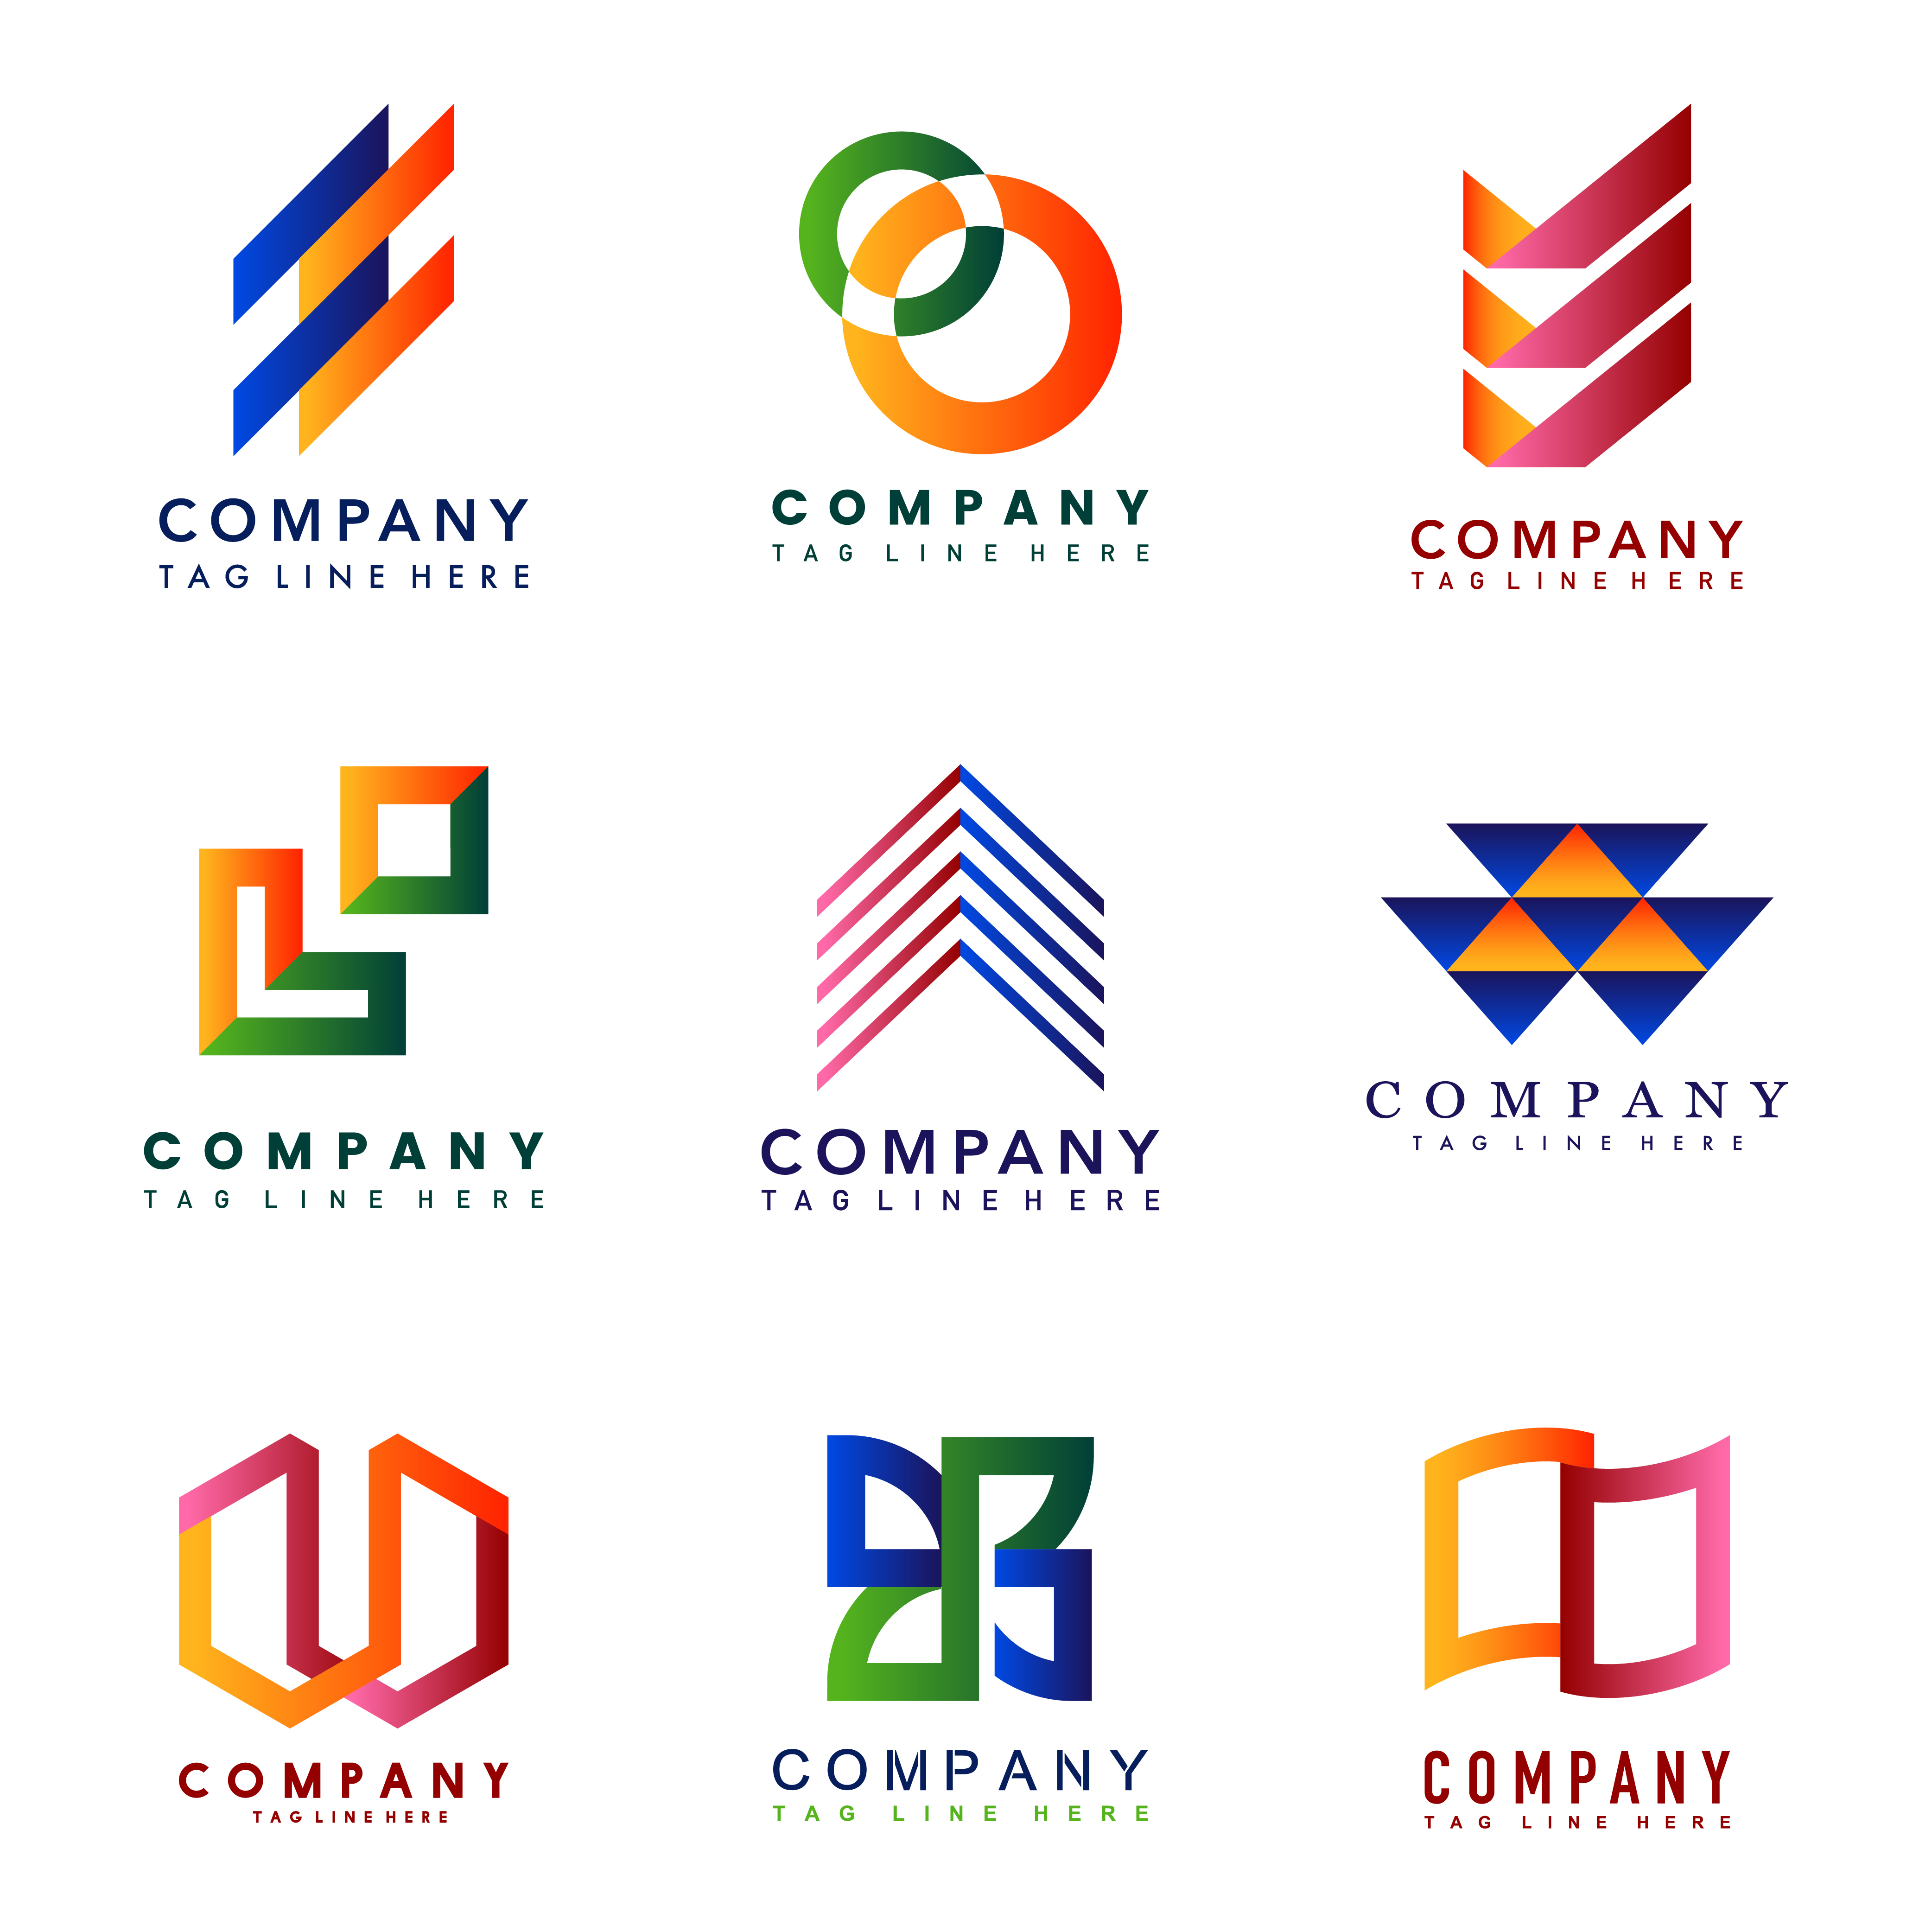 Uitgelezene Set of company logo design ideas vector - Download Free Vectors MU-48